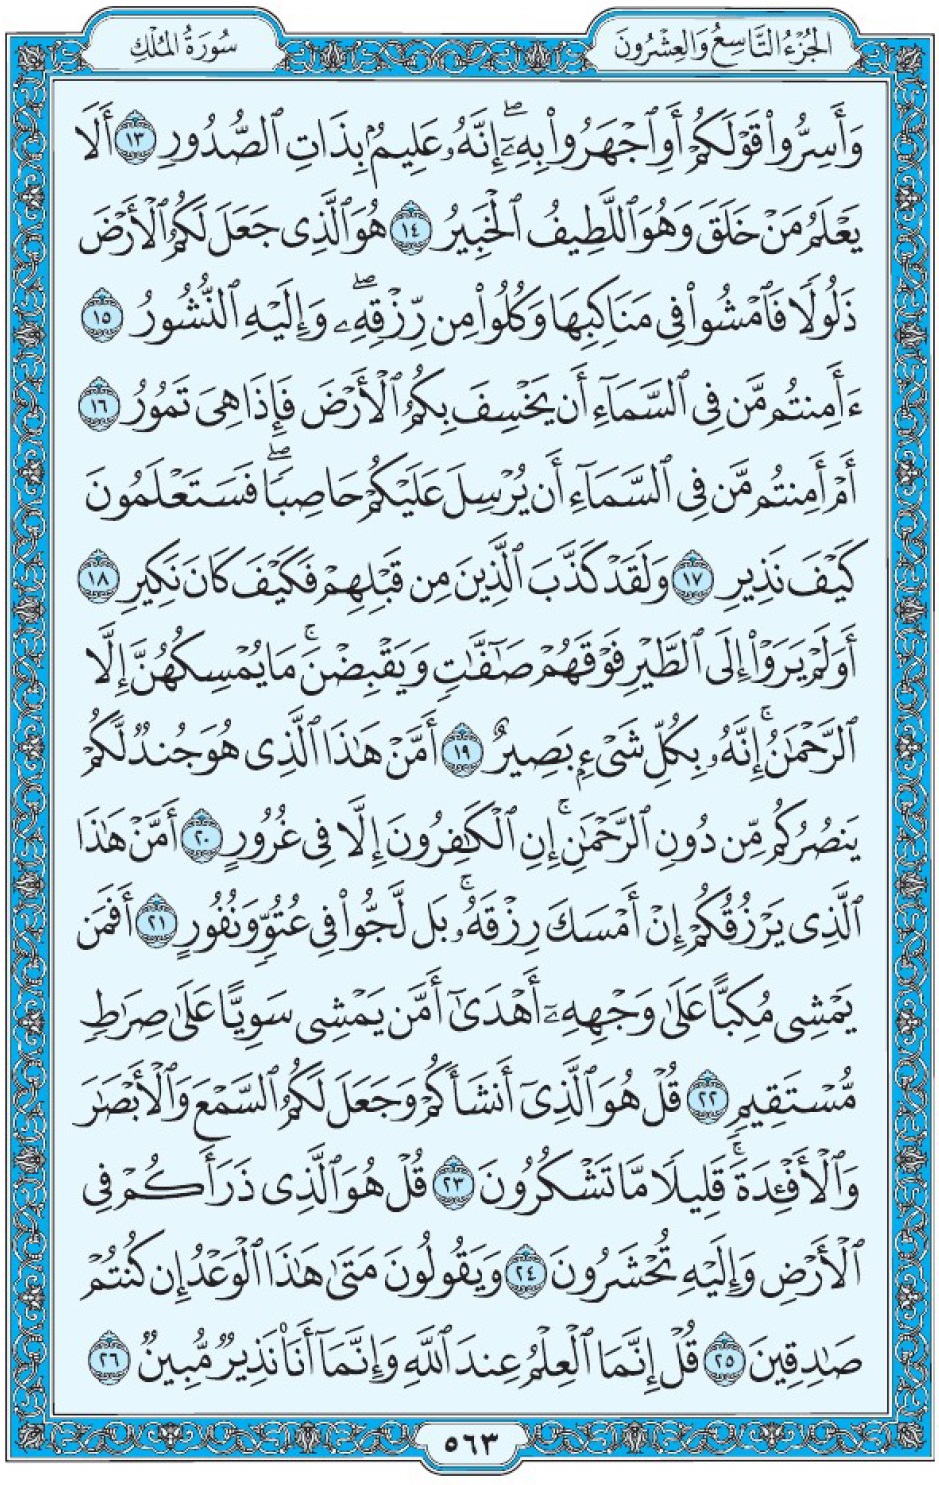 Коран Мединский мусхаф страница 563, аль-Мульк аят 13-26